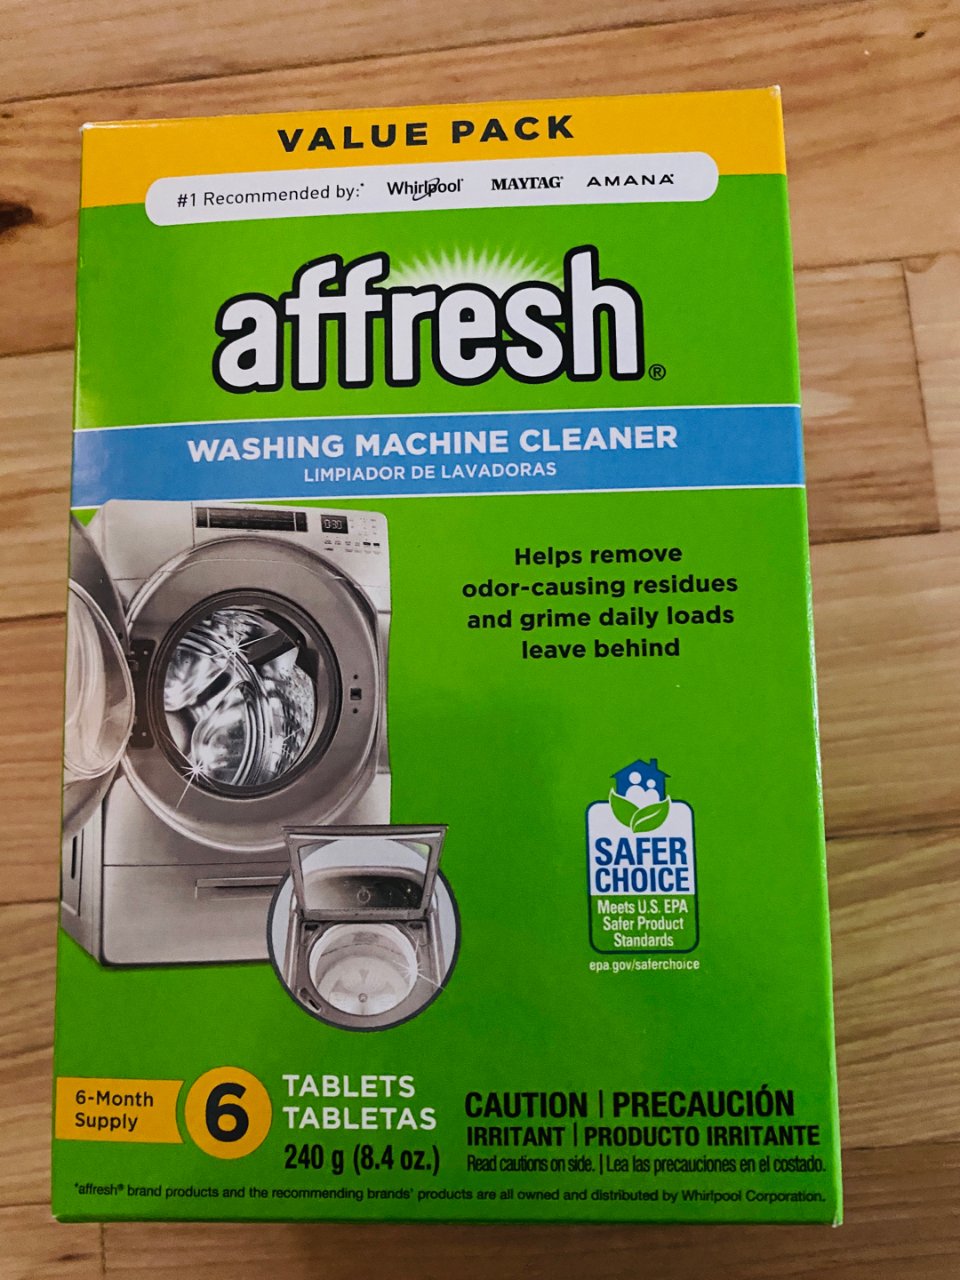 居家生活清洁用品Affresh...